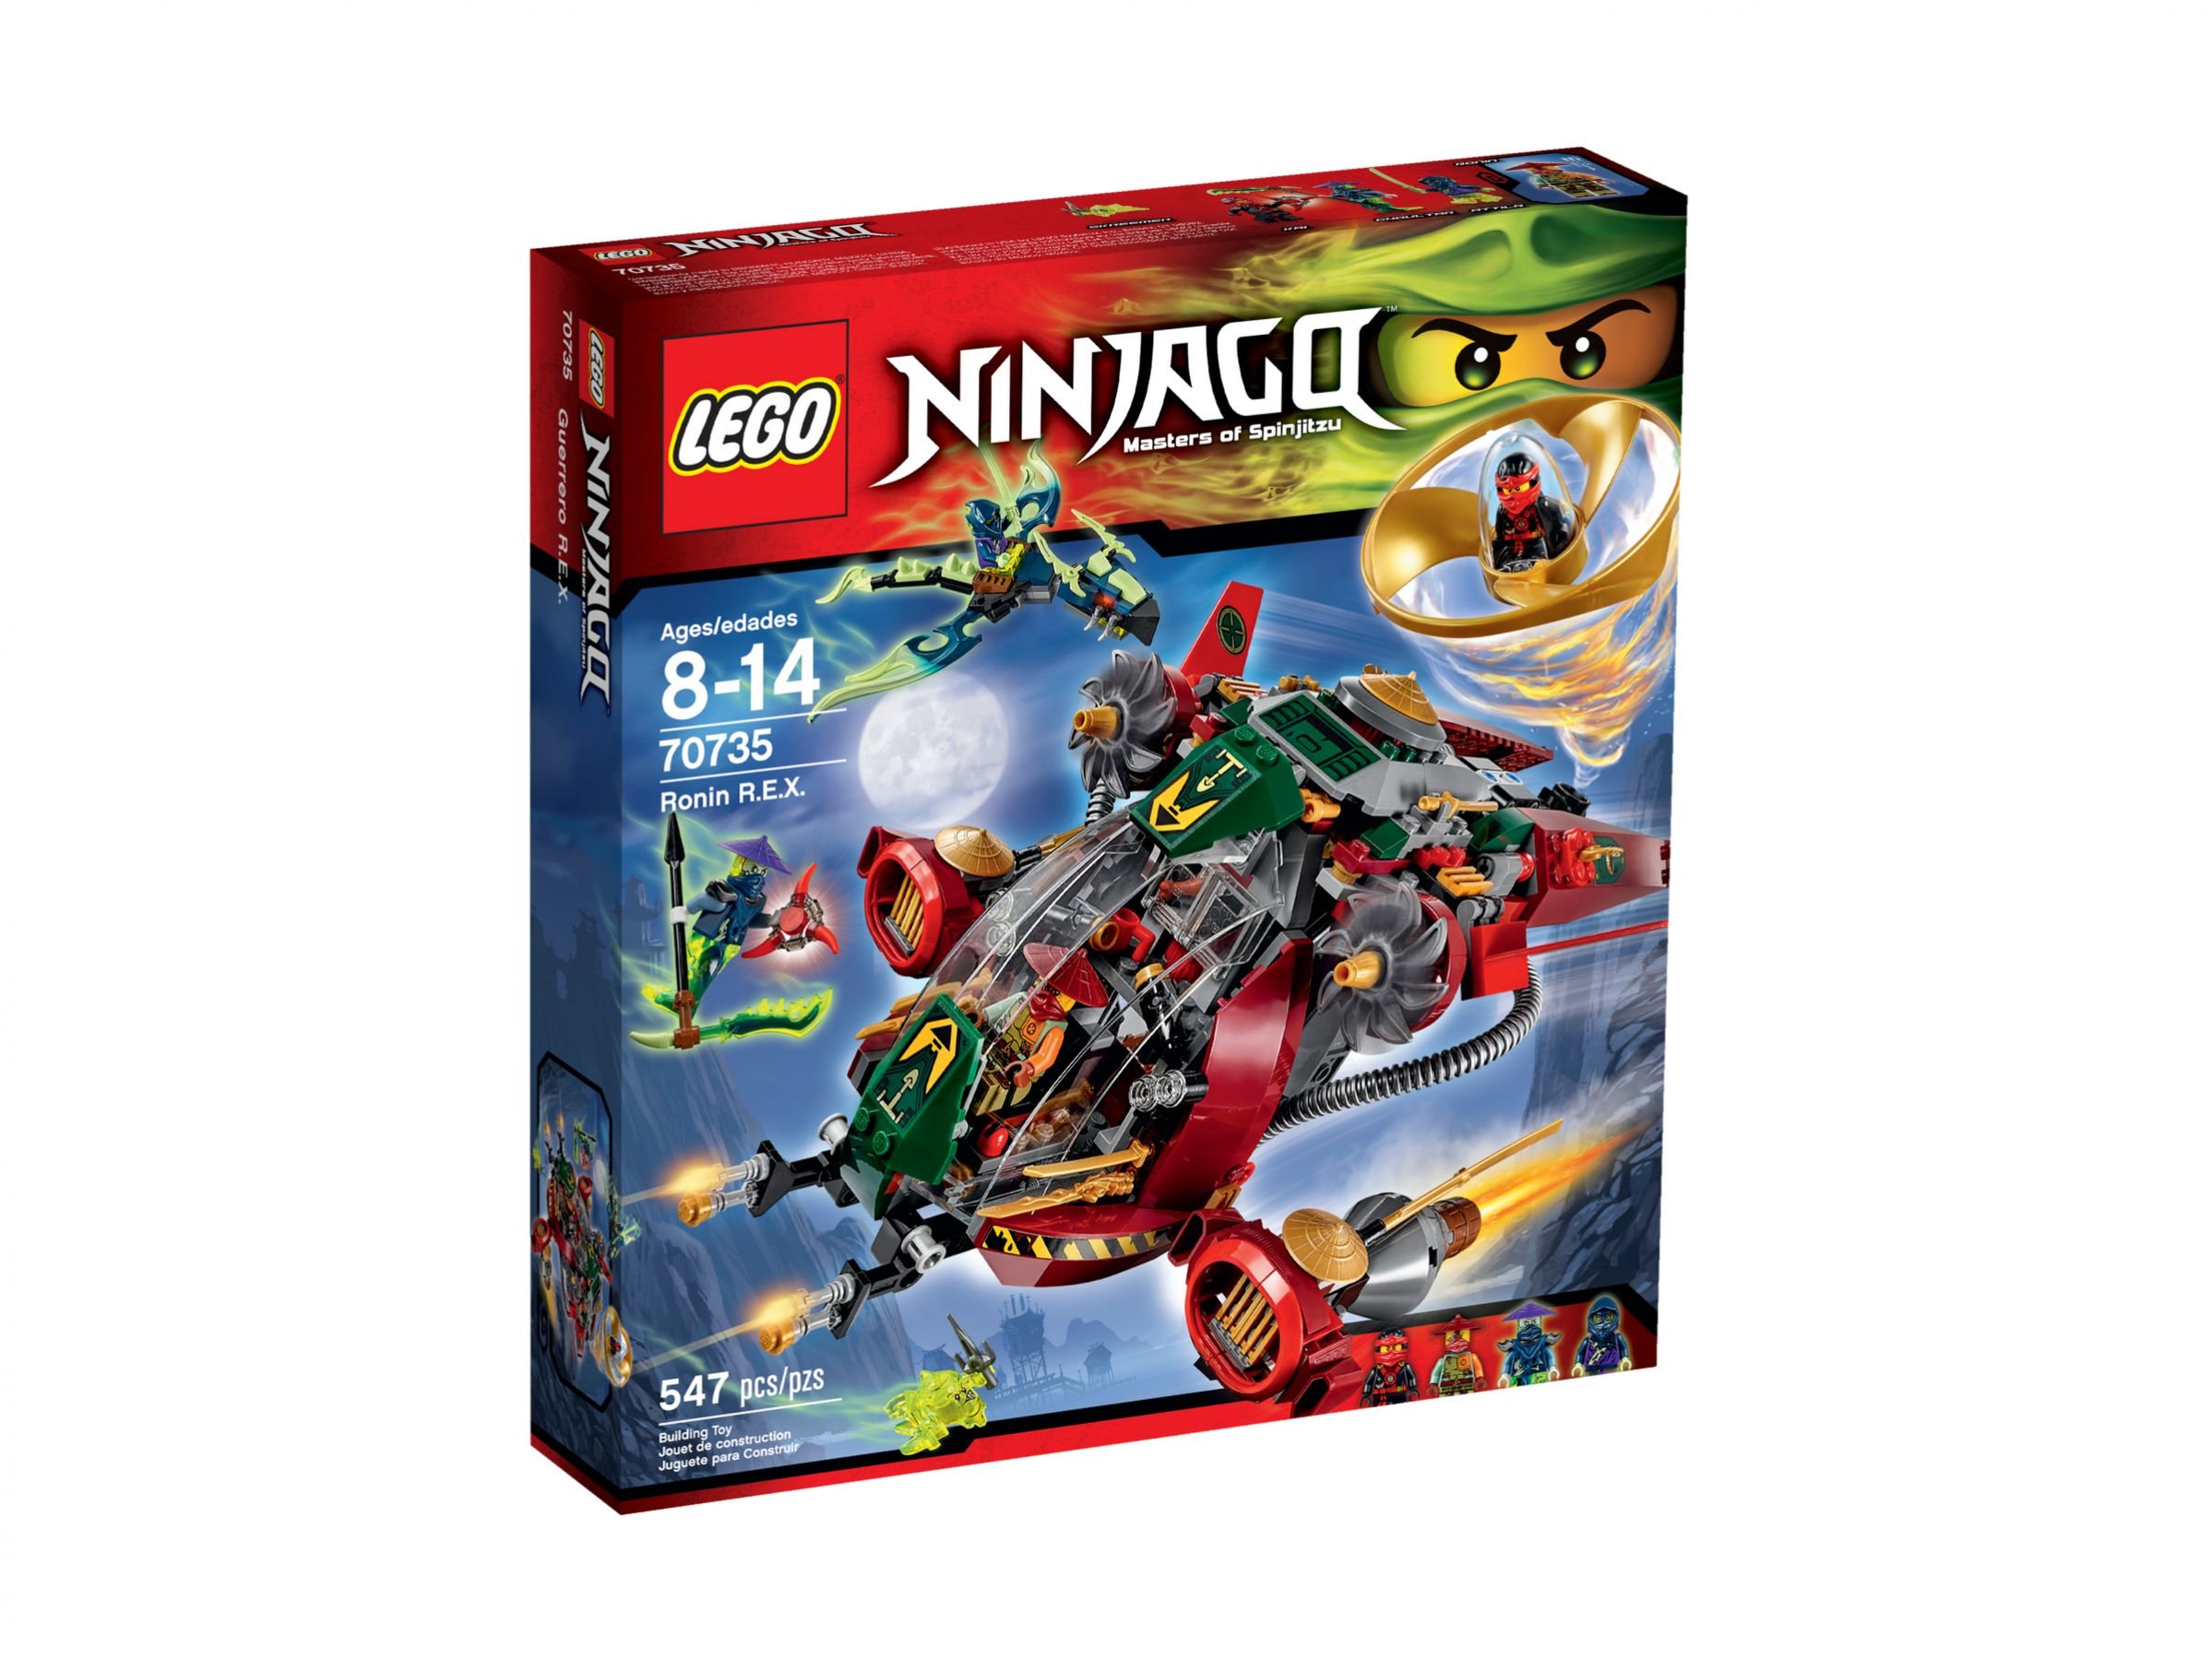 LEGO Ninjago 70735 Ronin R.E.X. LEGO_70735_alt1.jpg